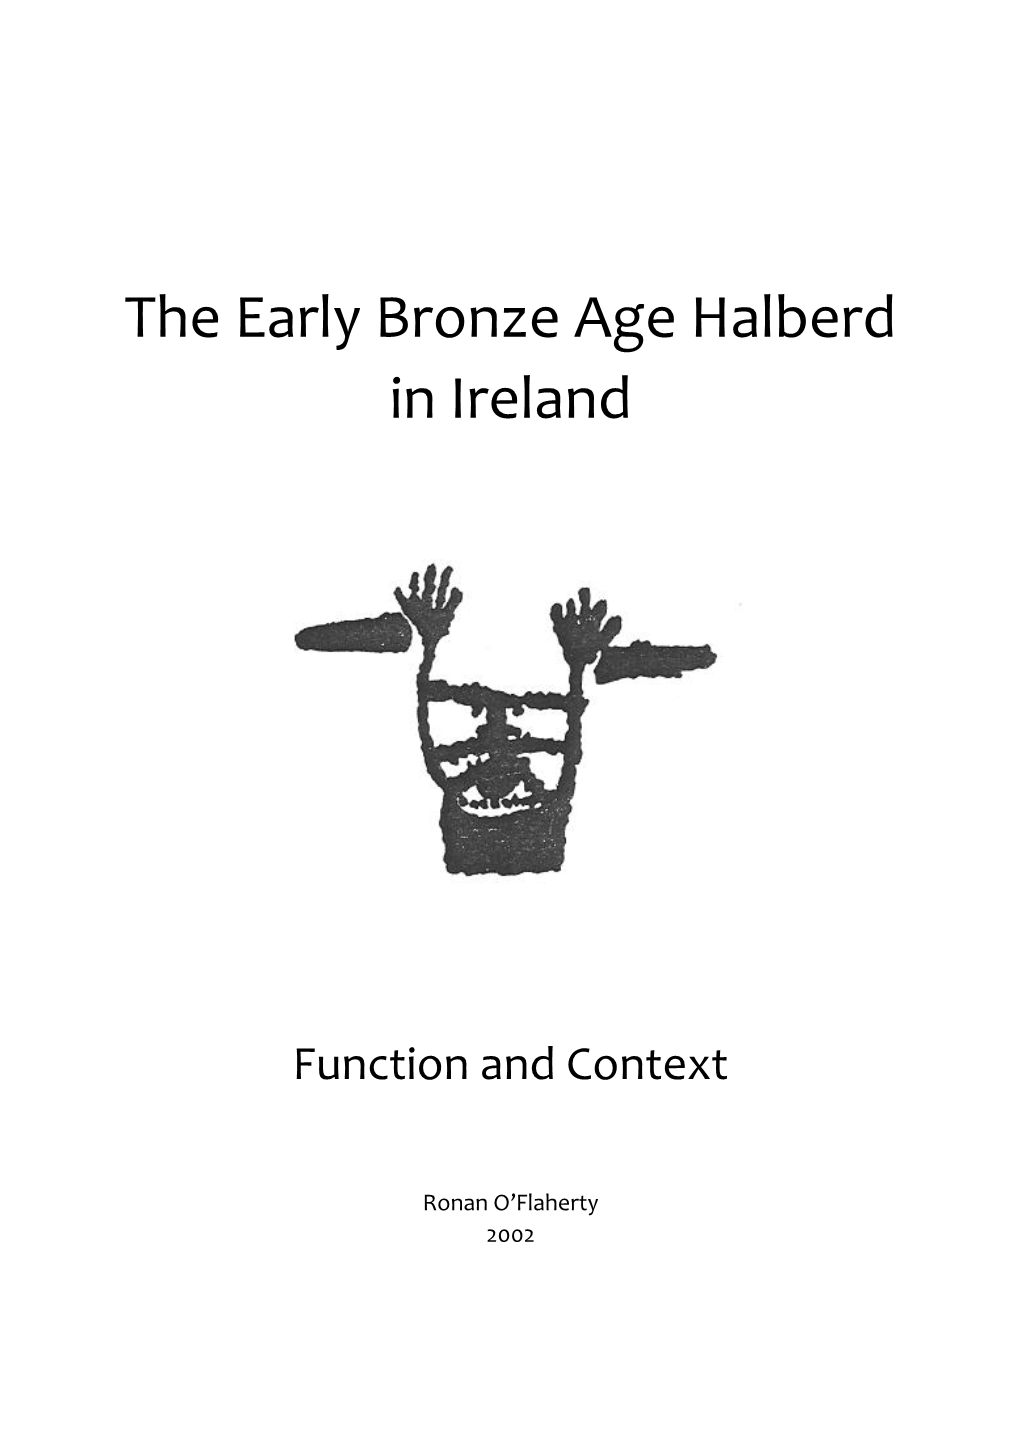 The Early Bronze Age Halberd in Ireland